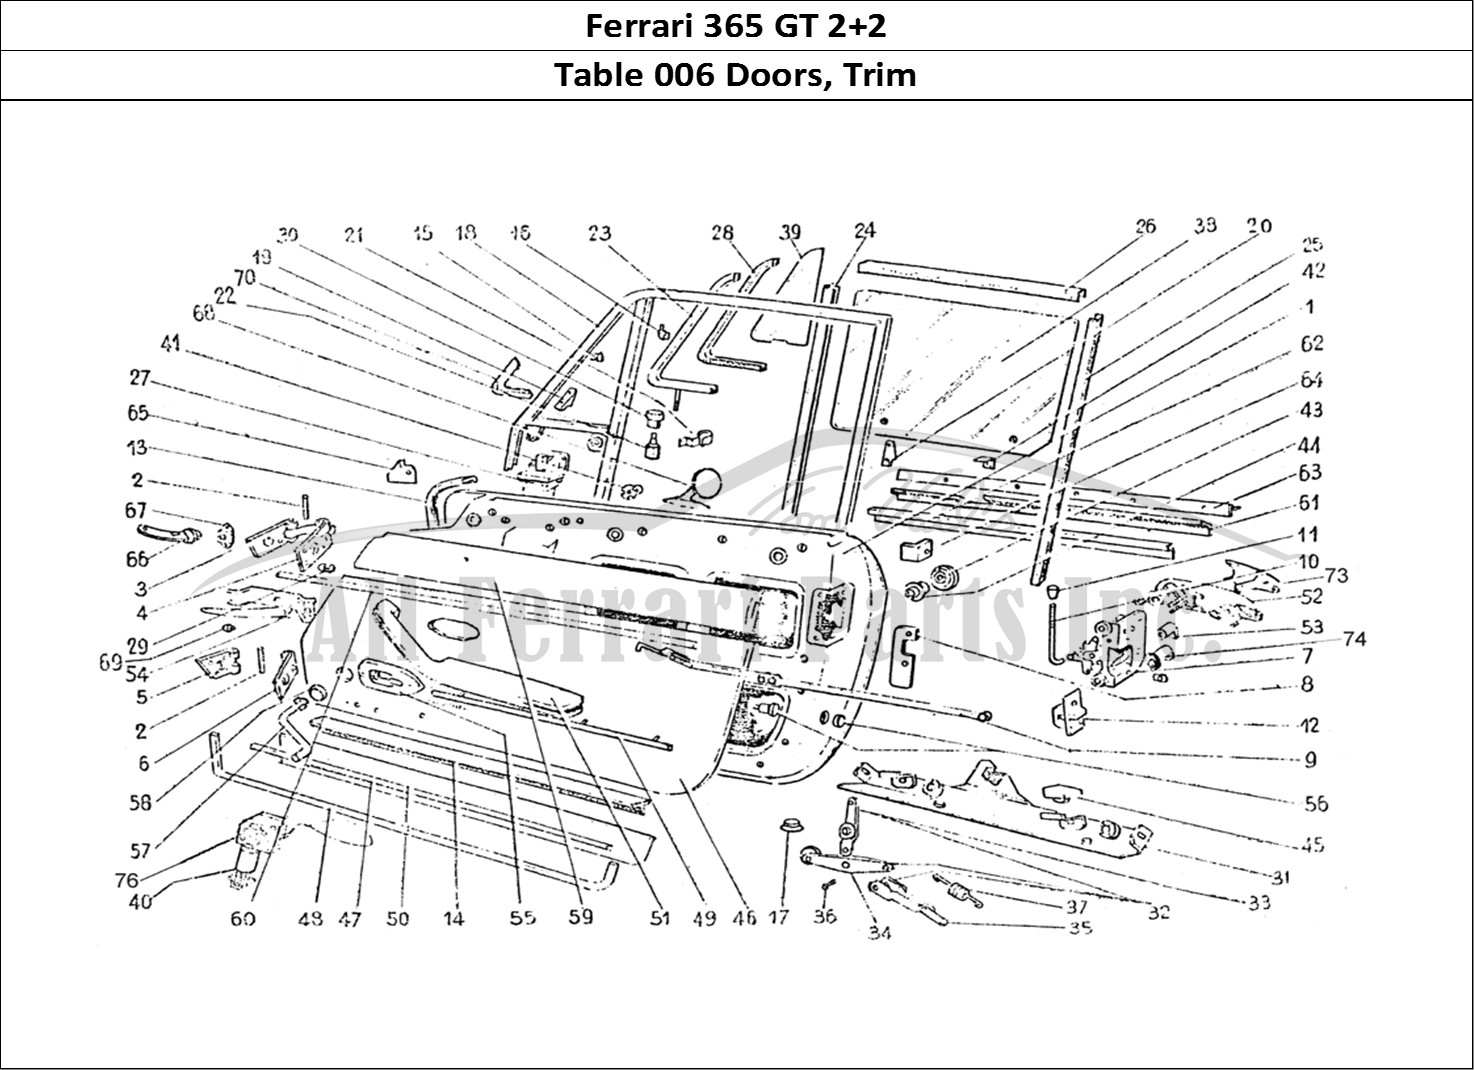 Ferrari Parts Ferrari 365 GT 2+2 (Coachwork) Page 006 Doors & Trim